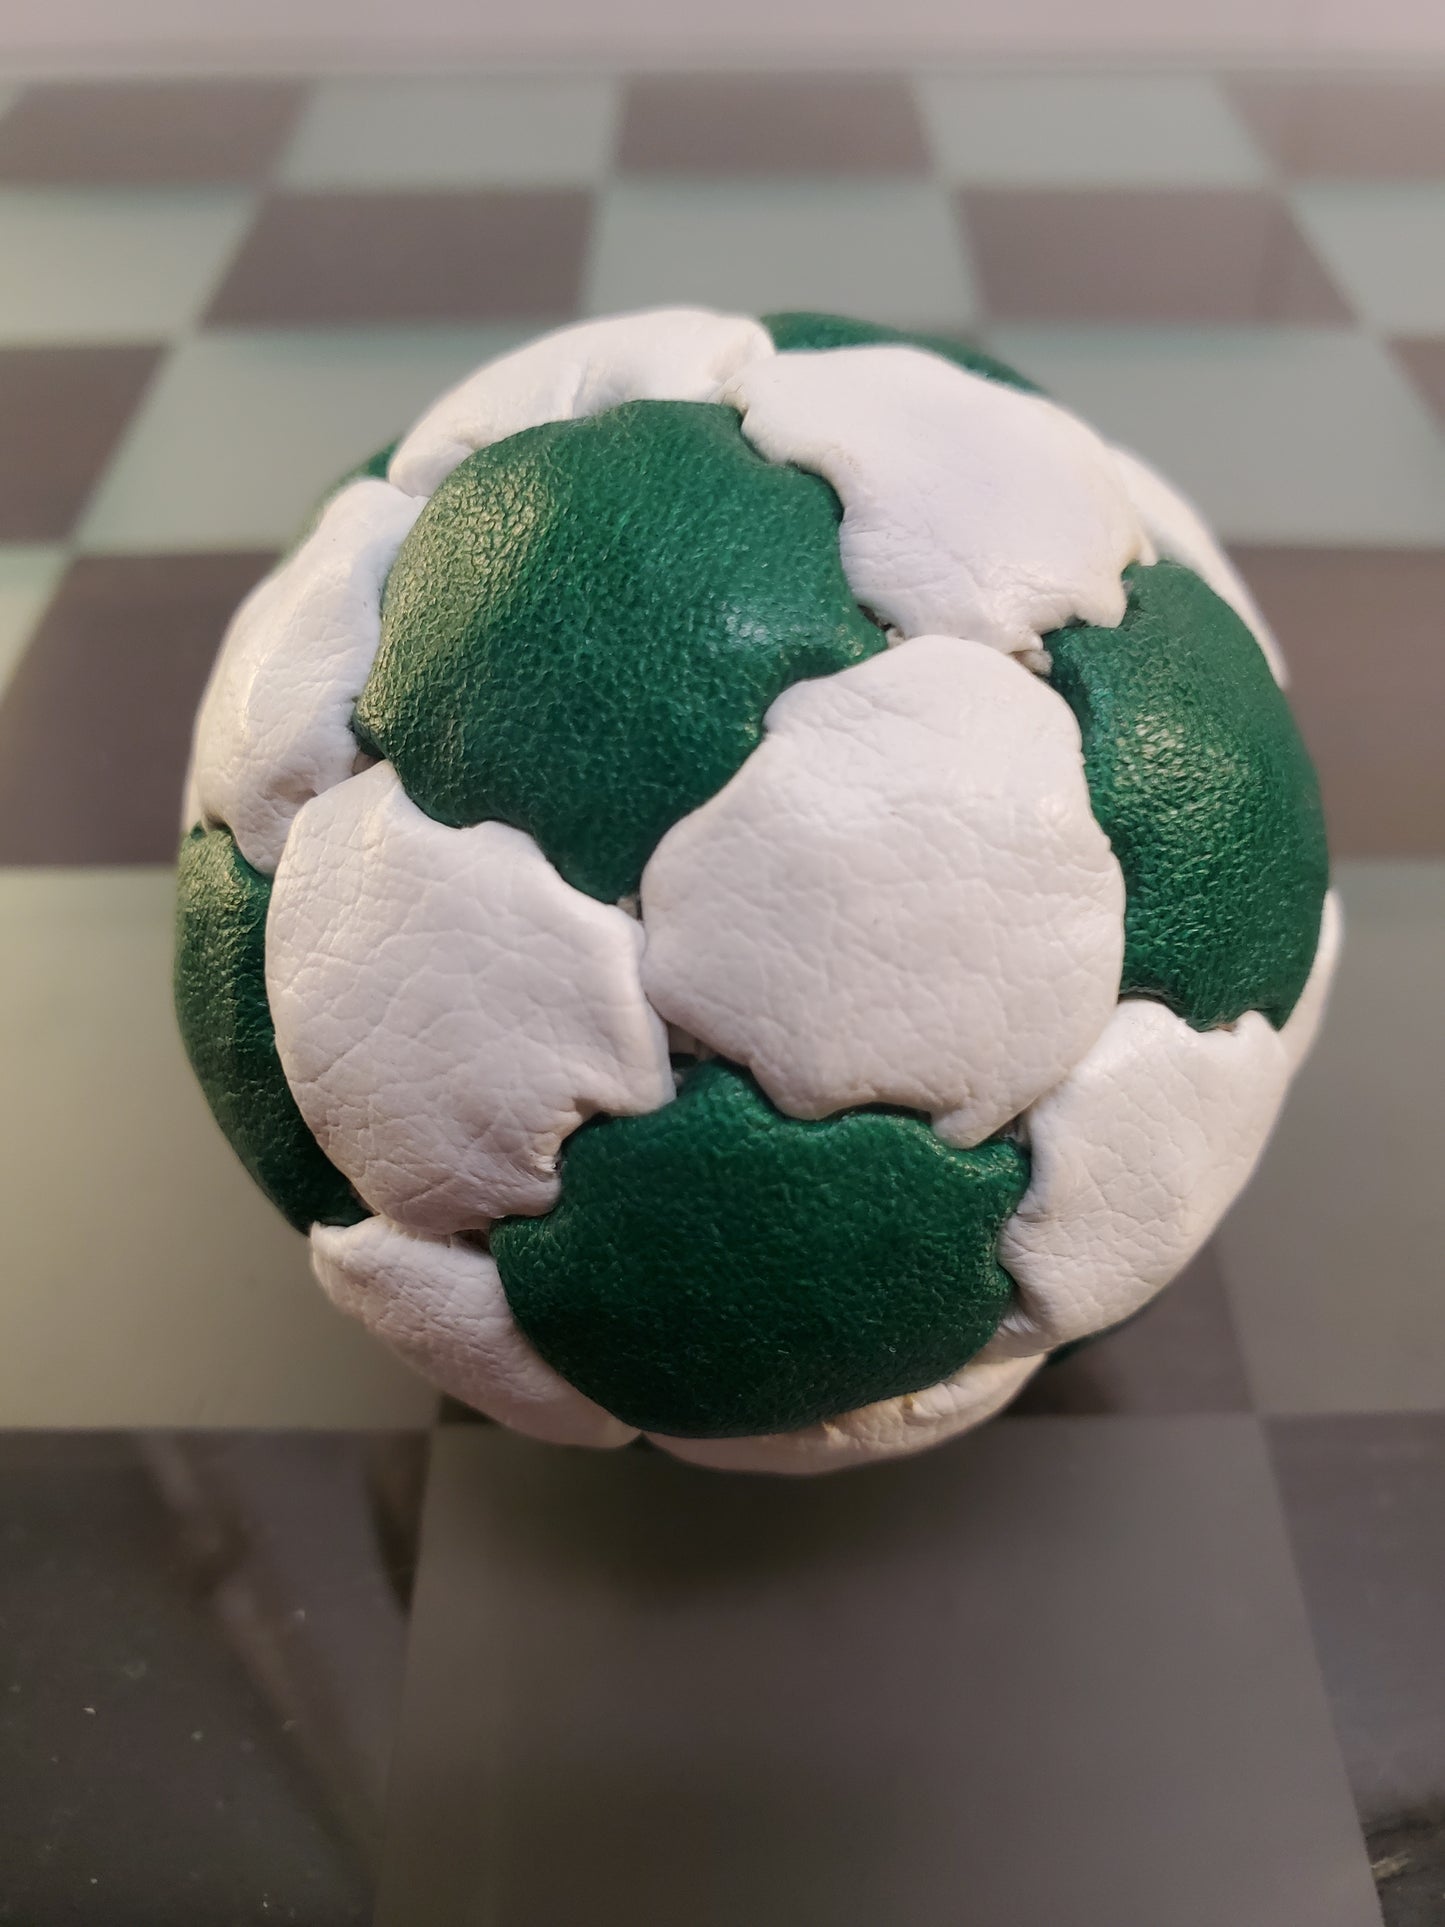 43- Panel  Soccer Footbag Hacky Sack Pellet juggle Stress Ball Green and white